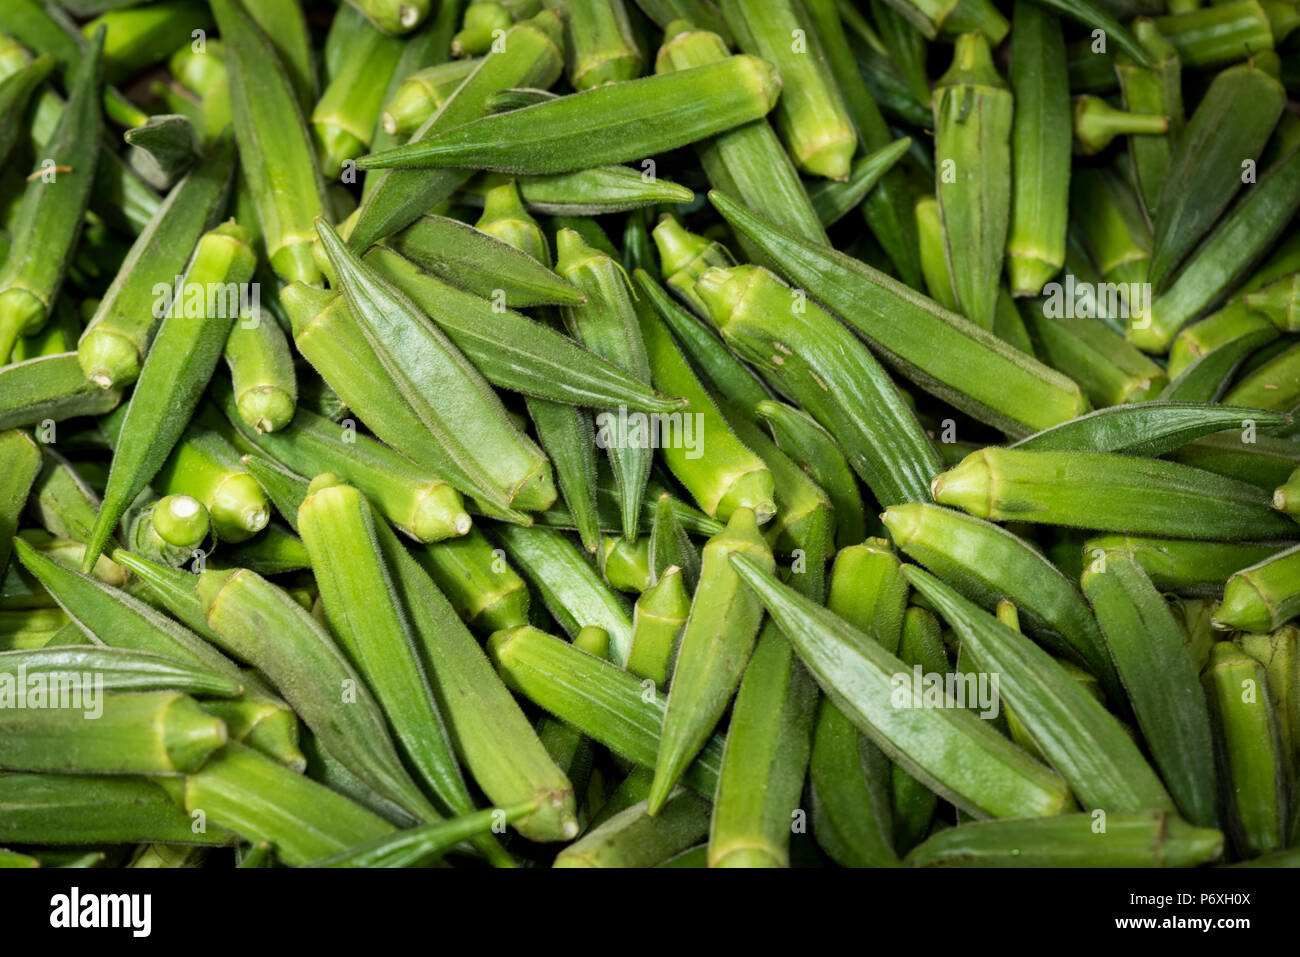 Bin of fresh okra seed pods (Abelmoschus esculentus), a popular subtropical vegetable, at a vegetable market Stock Photo